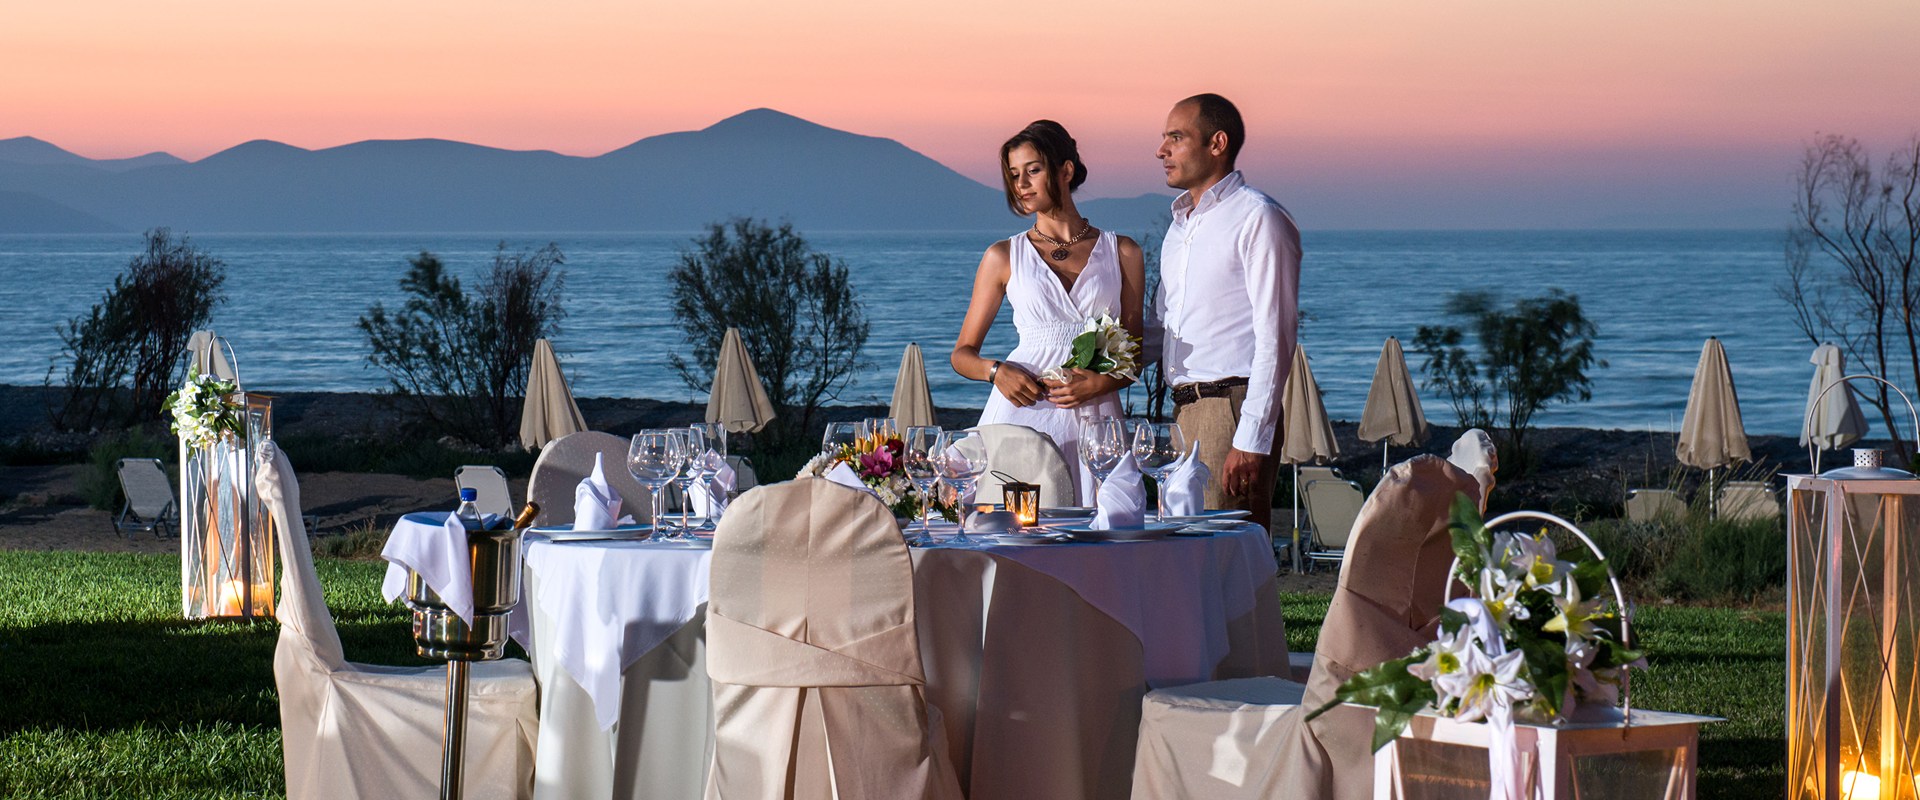 Fascination Greek Wedding Island: Sights of Kos